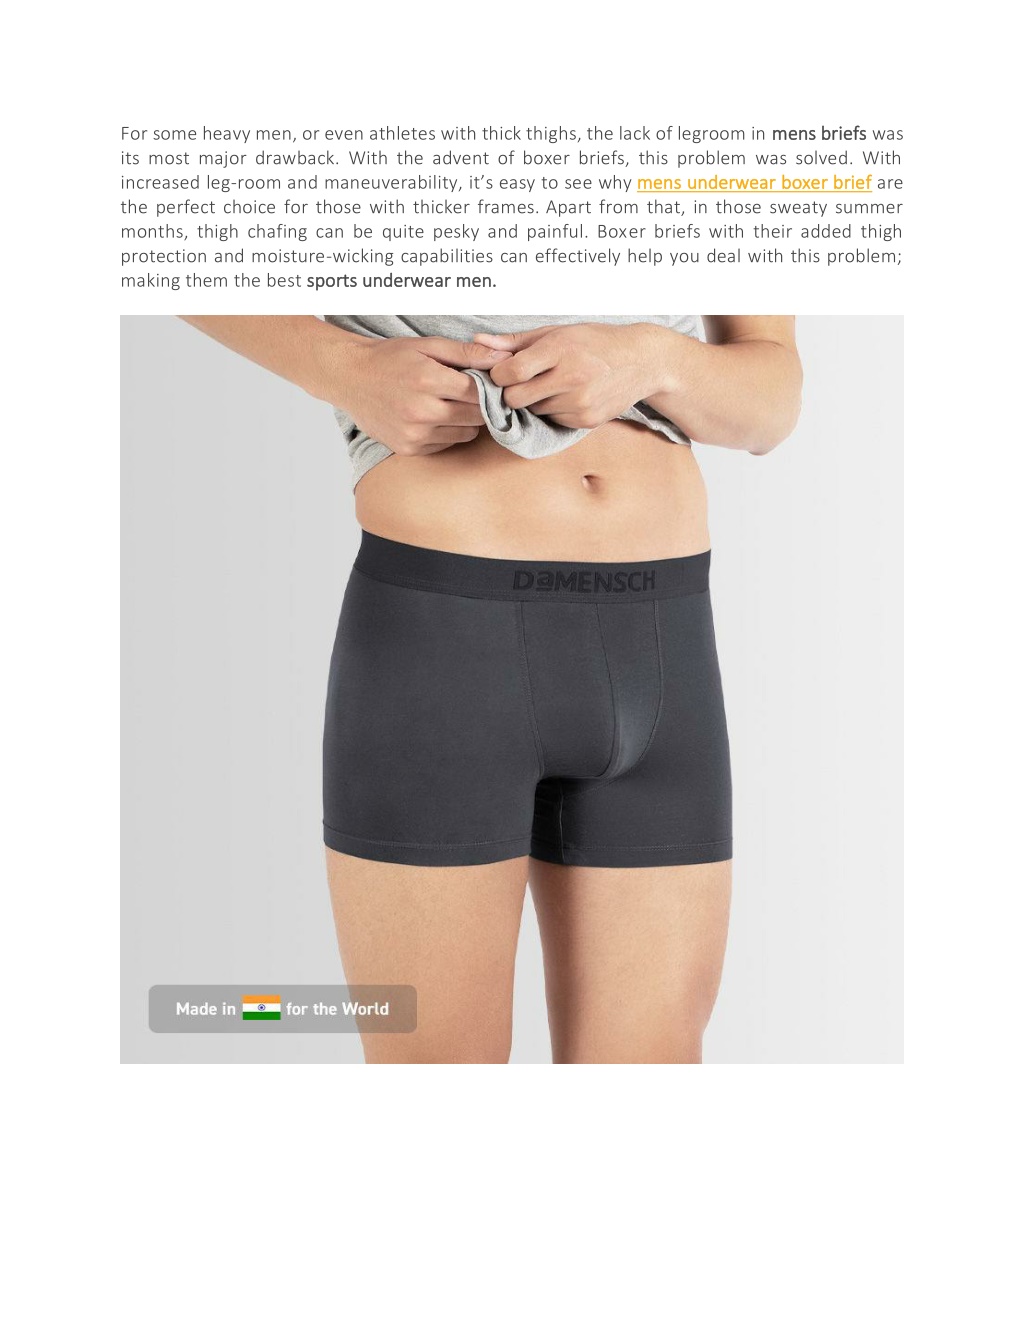 PPT - Boxer briefs vs Trunks - The Right Underwear for Men PowerPoint ...